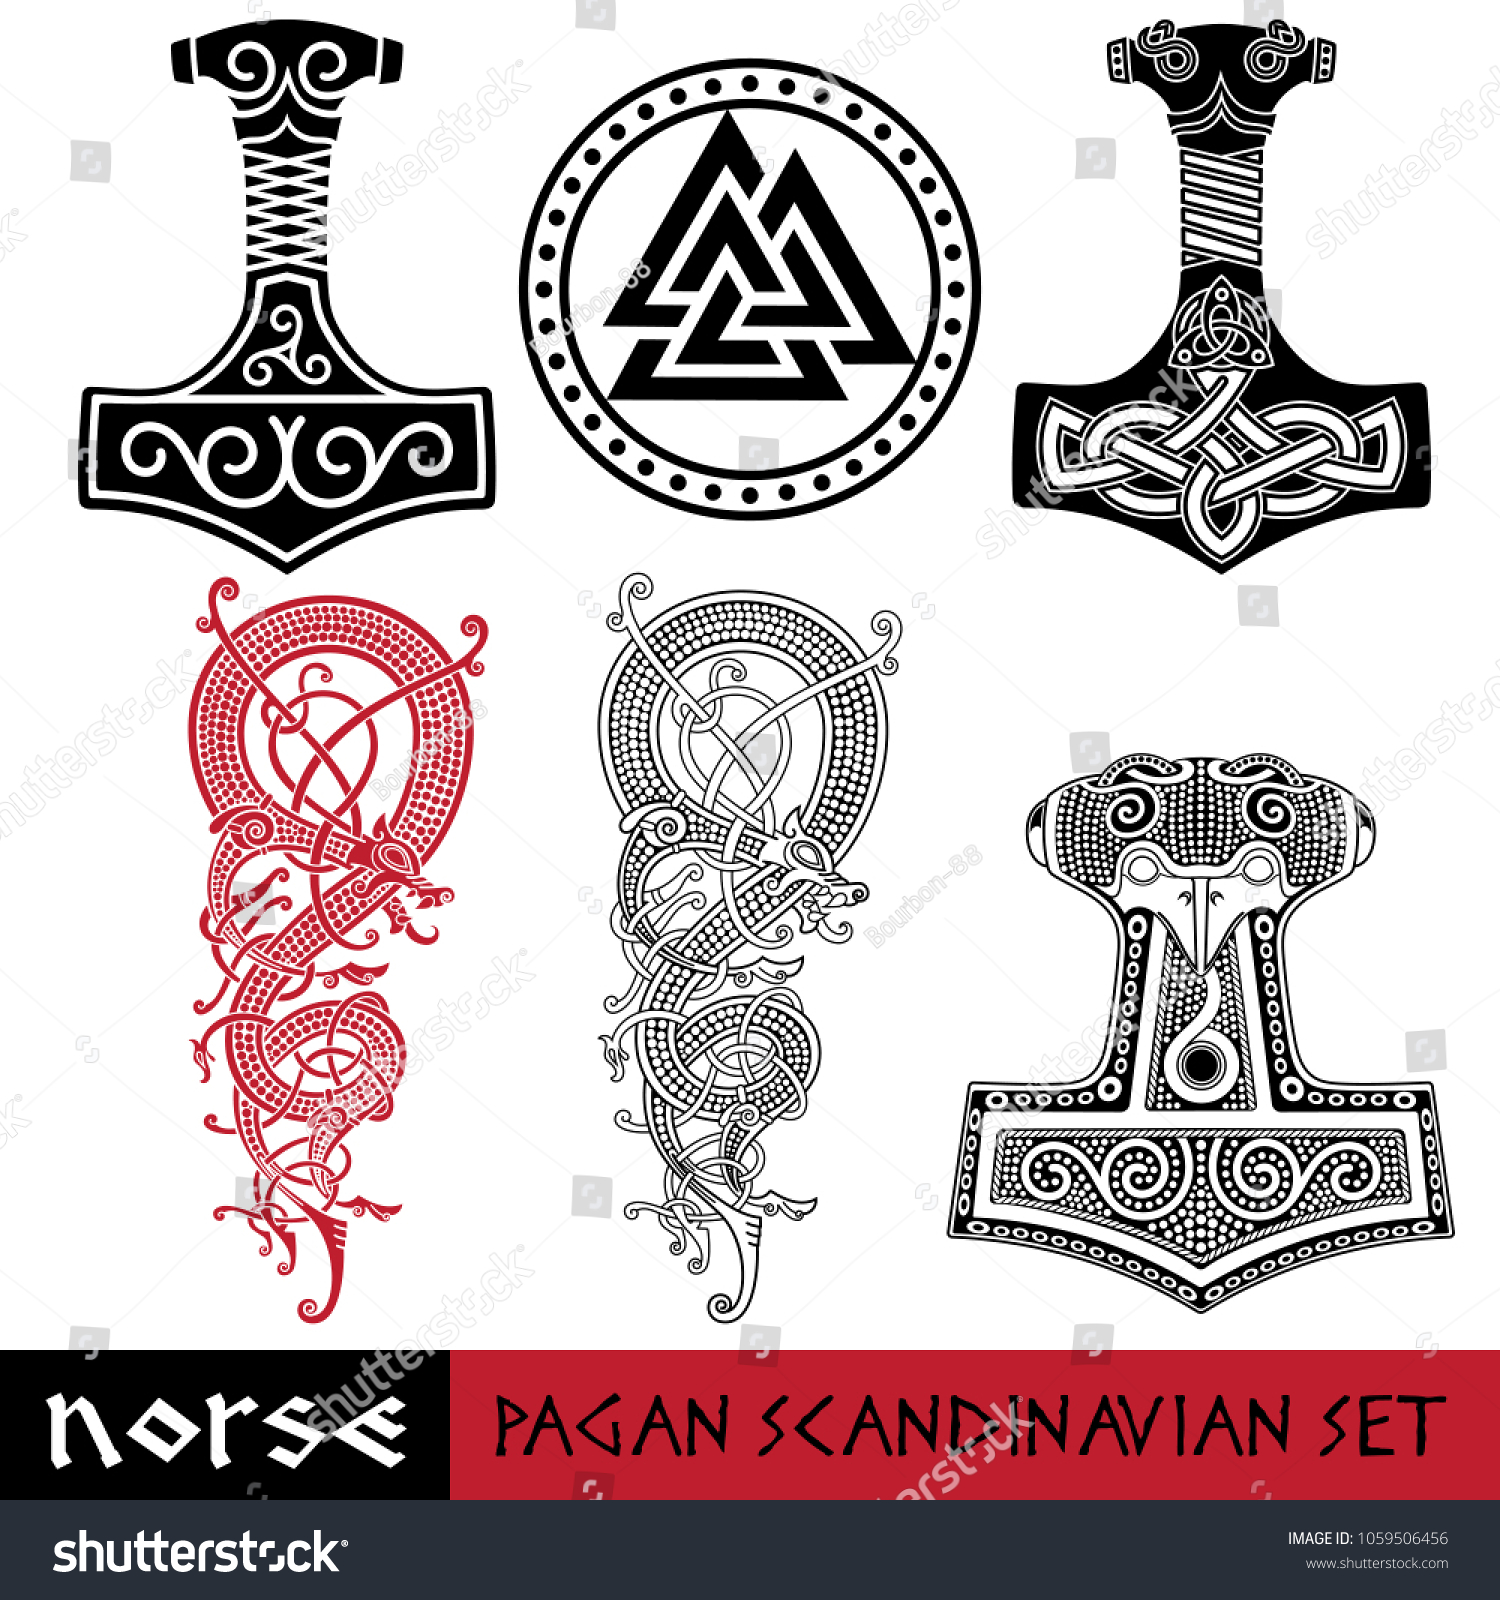 SVG of Scandinavian pagan set - Thors hammer - Mjollnir, Odin sign - Valknut and world dragon Jormundgand. Illustration of Norse mythology, isolated on white, vector illustration svg